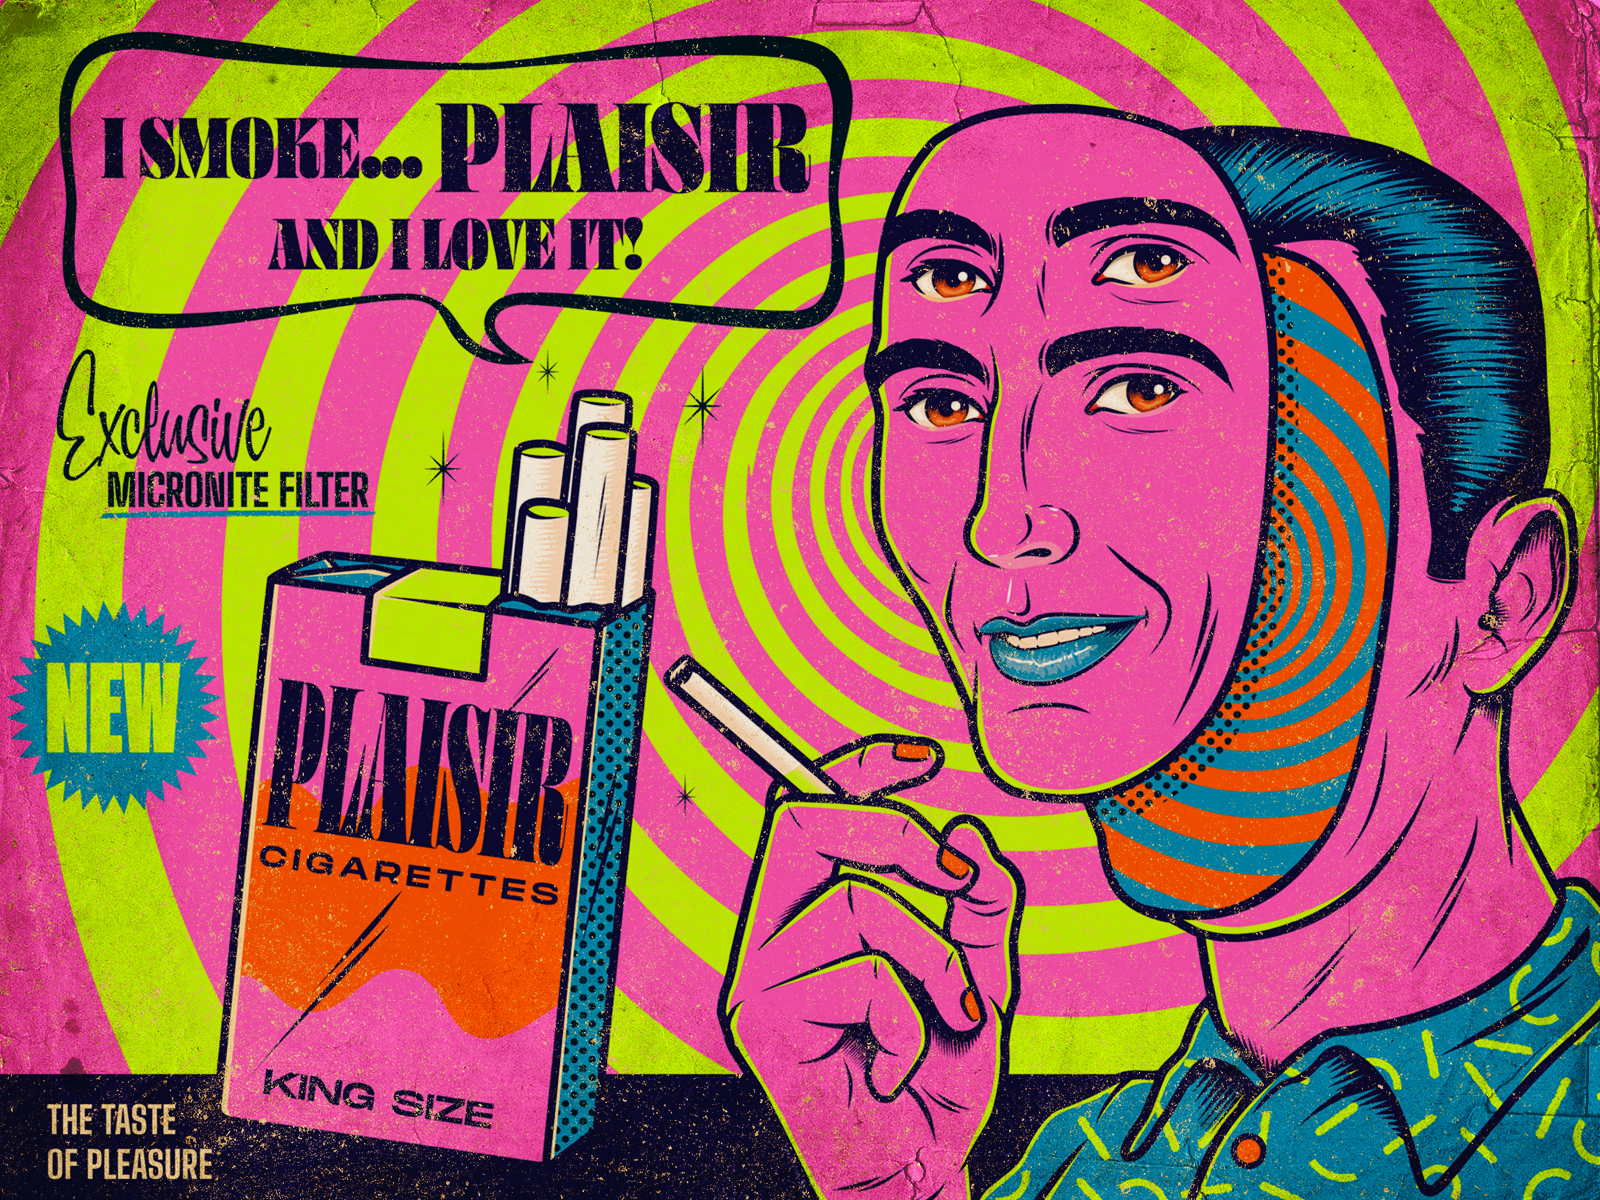 Plaisir Ad ad advertising art bizarre cigarette color design illustration psychedelic retro surrealism tobacco industry vector vintage weird